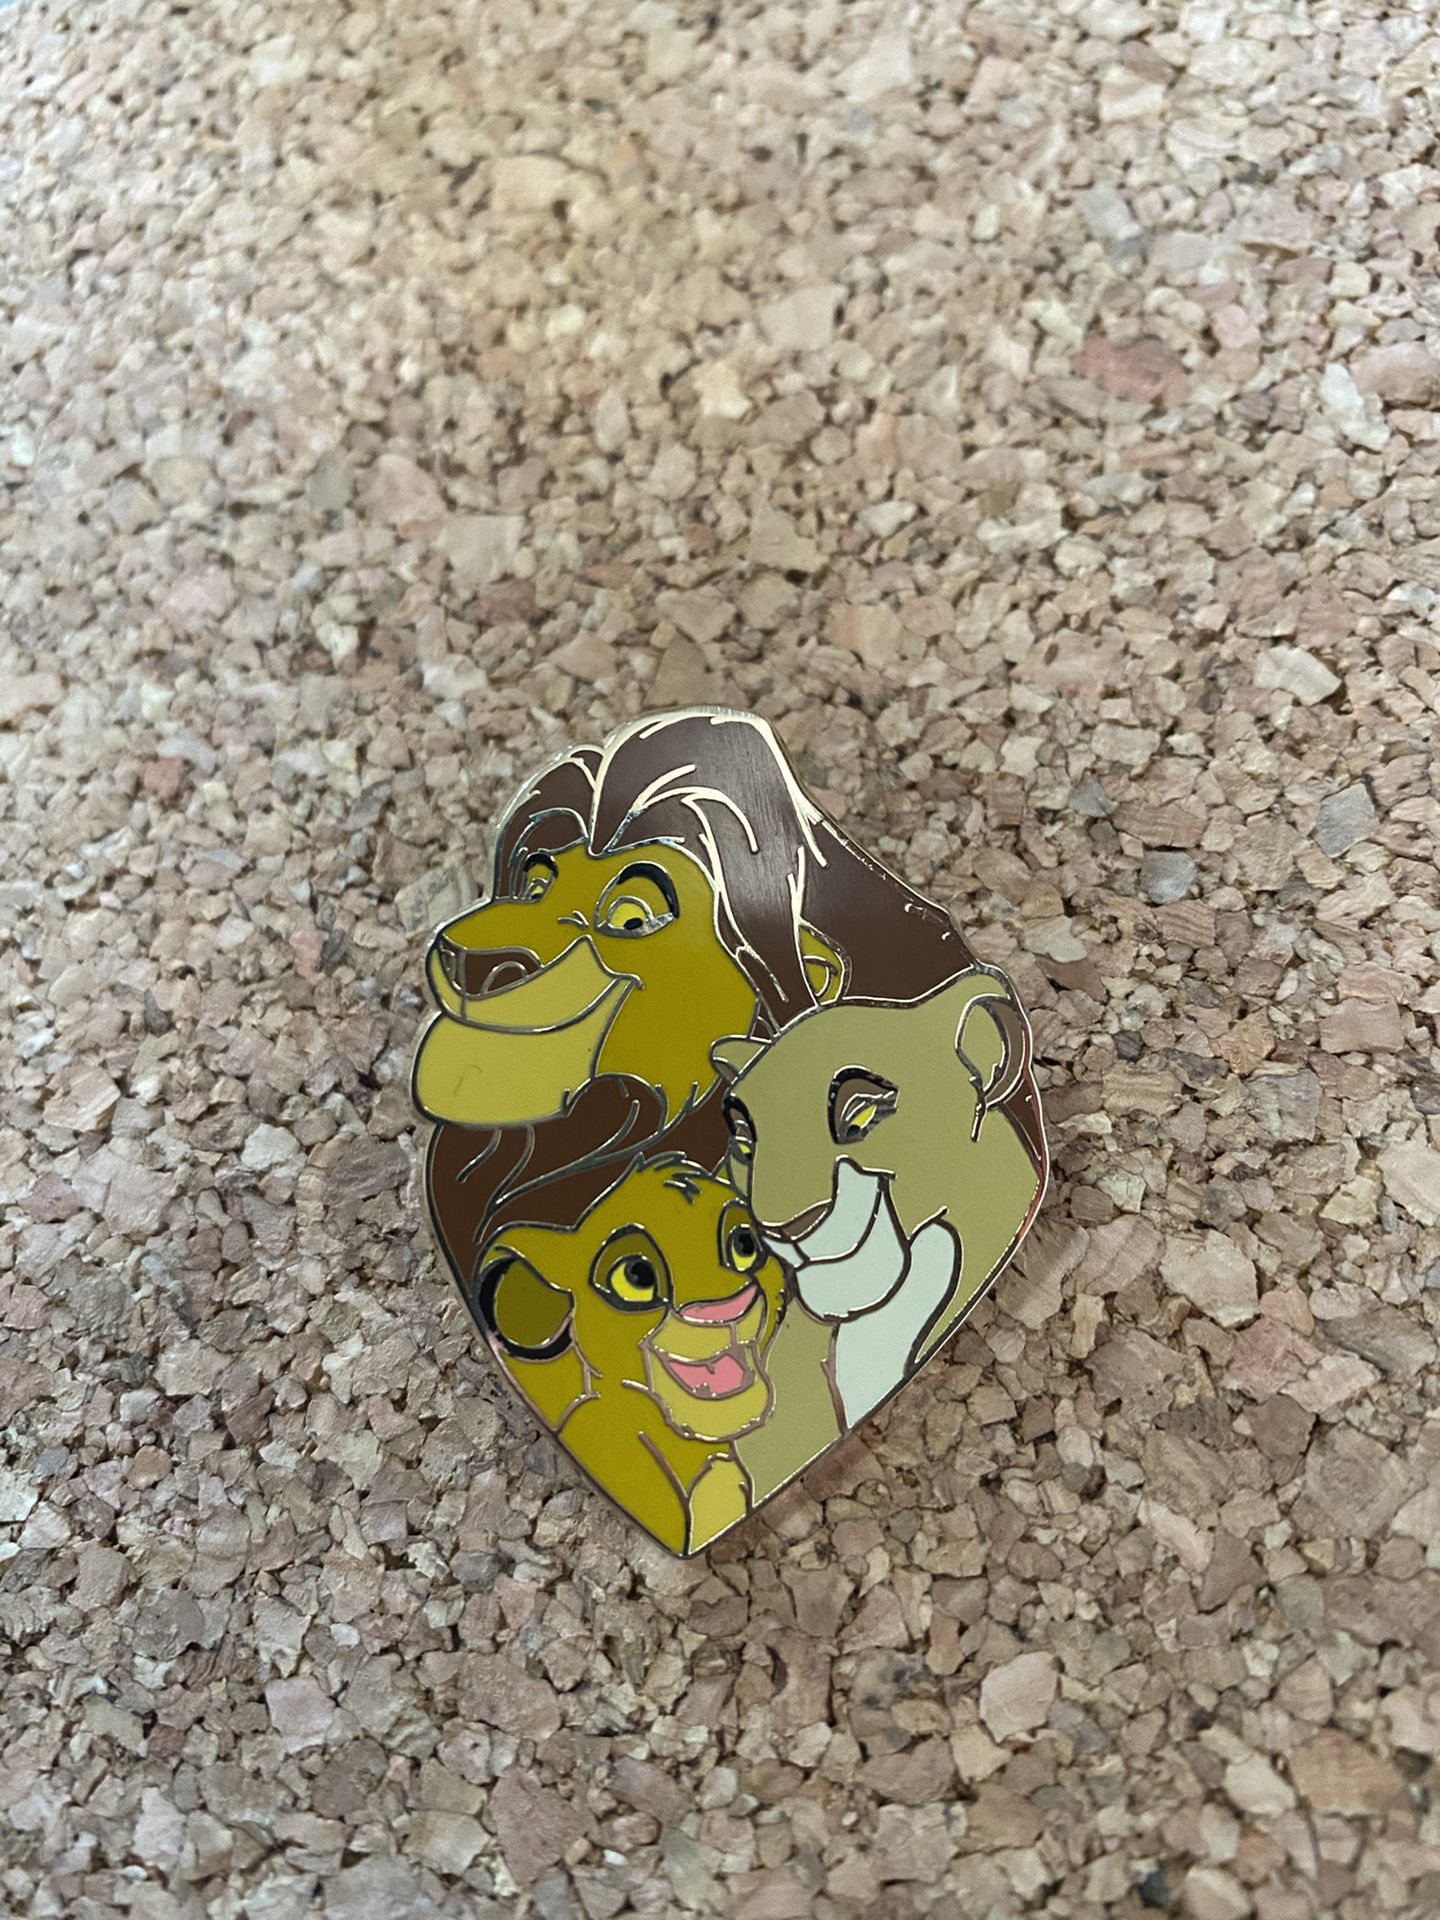 Official Disney Trading enamel pin